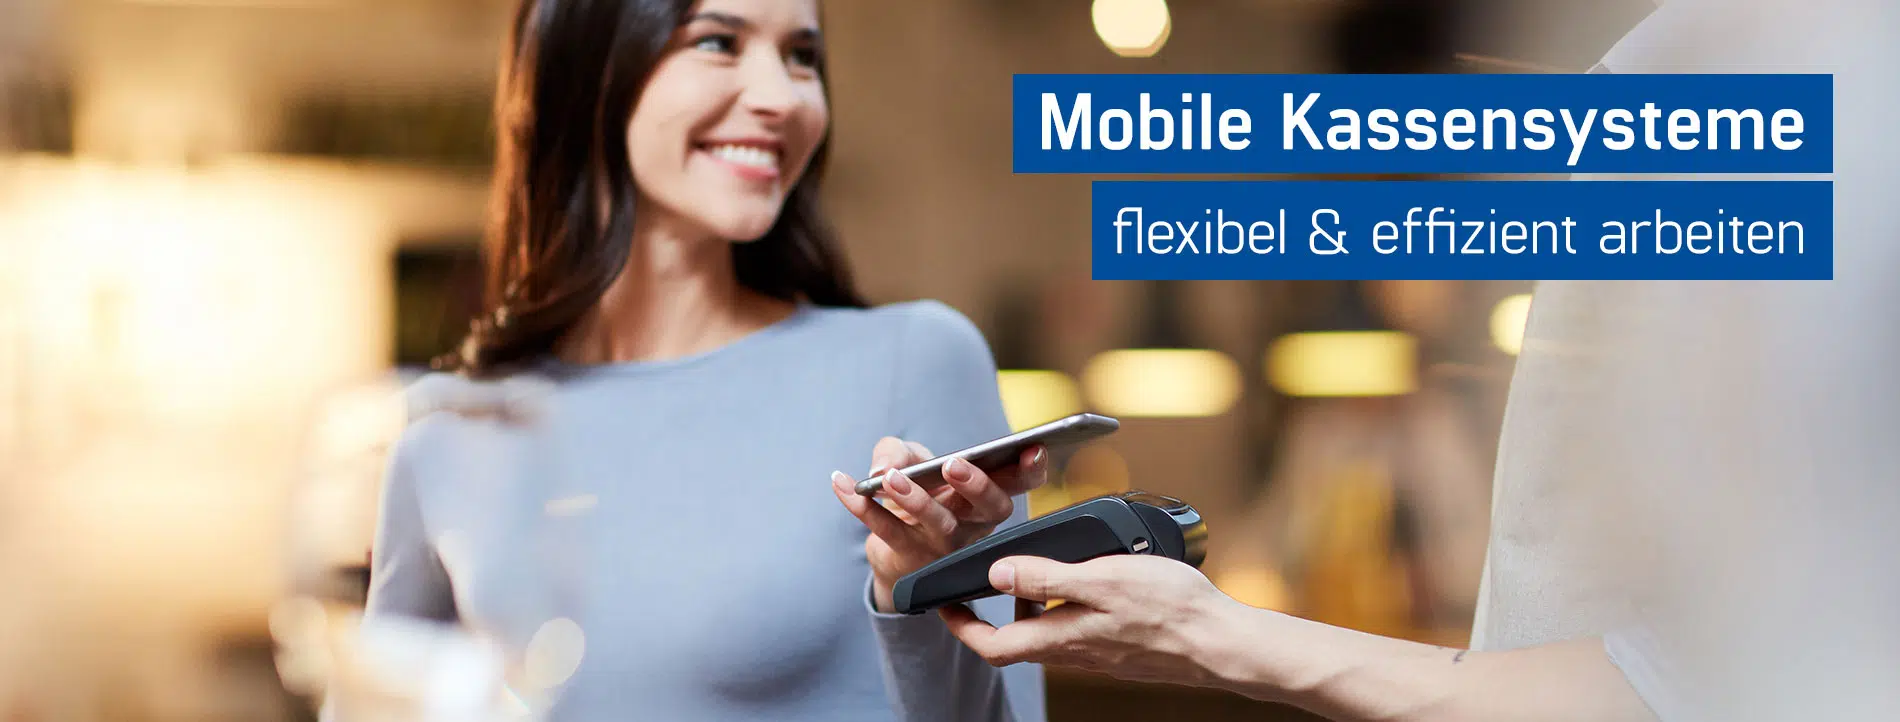 Mobile Kassensysteme Gastronomie flexibel & effizient, Frau bezahlt an mobiler Kasse | auch für Lieferservice Software